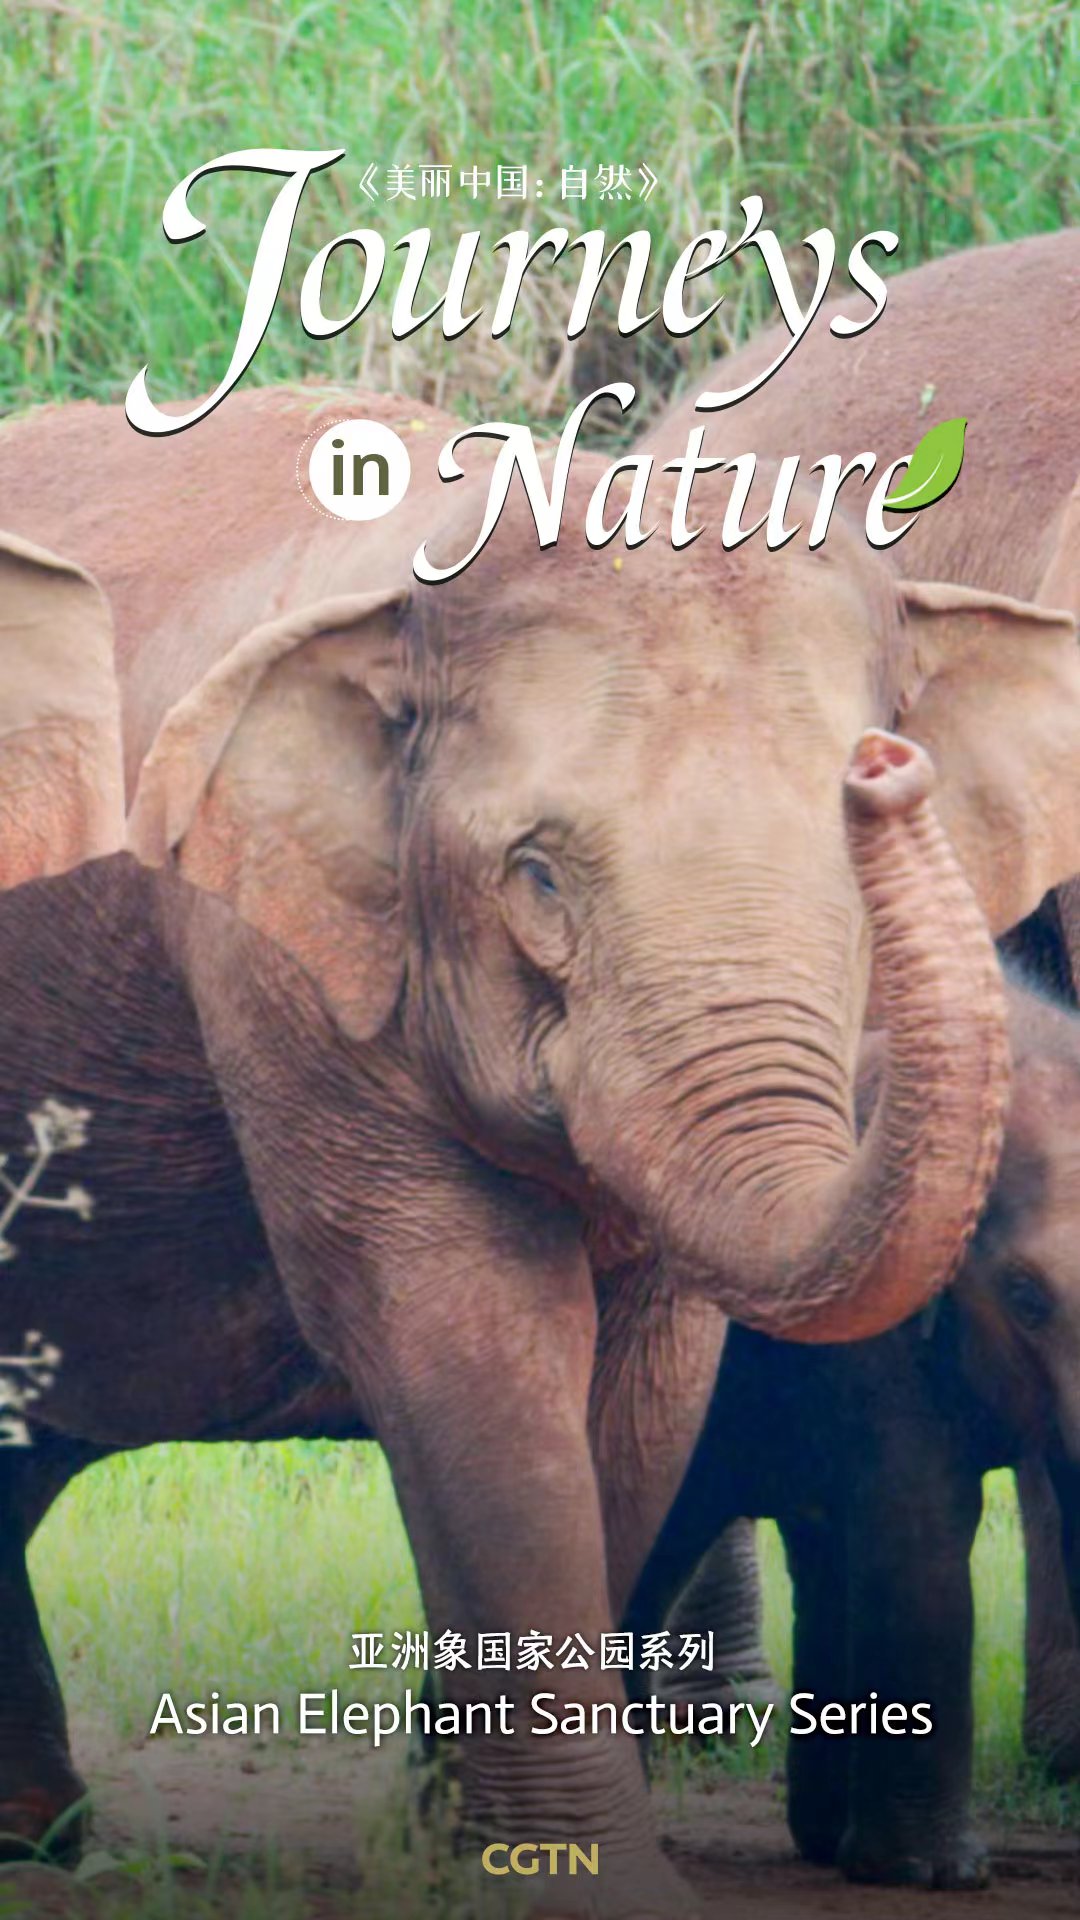 CGTN Nature presents 'Journeys in Nature: Asian Elephant Sanctuary Series'